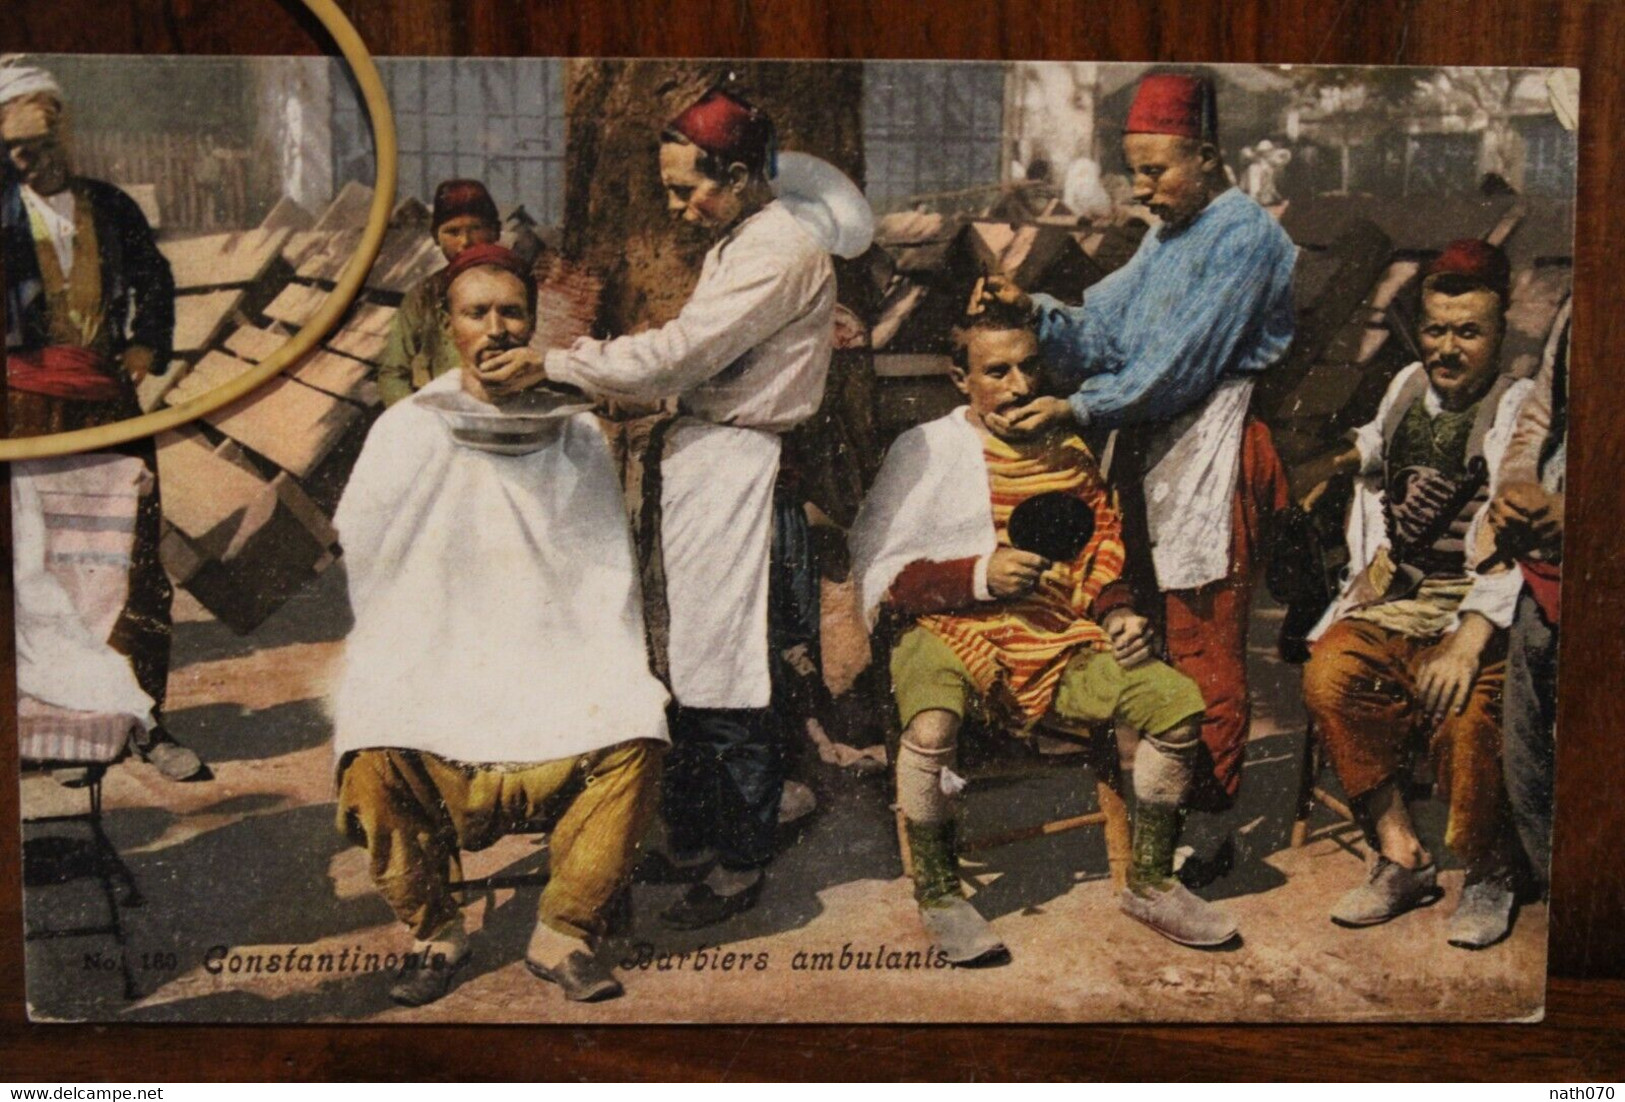 AK 1910 CPA PERA Barbiers Ambulants LEVANT Turkey Empire Ottoman Turkish - Turquia